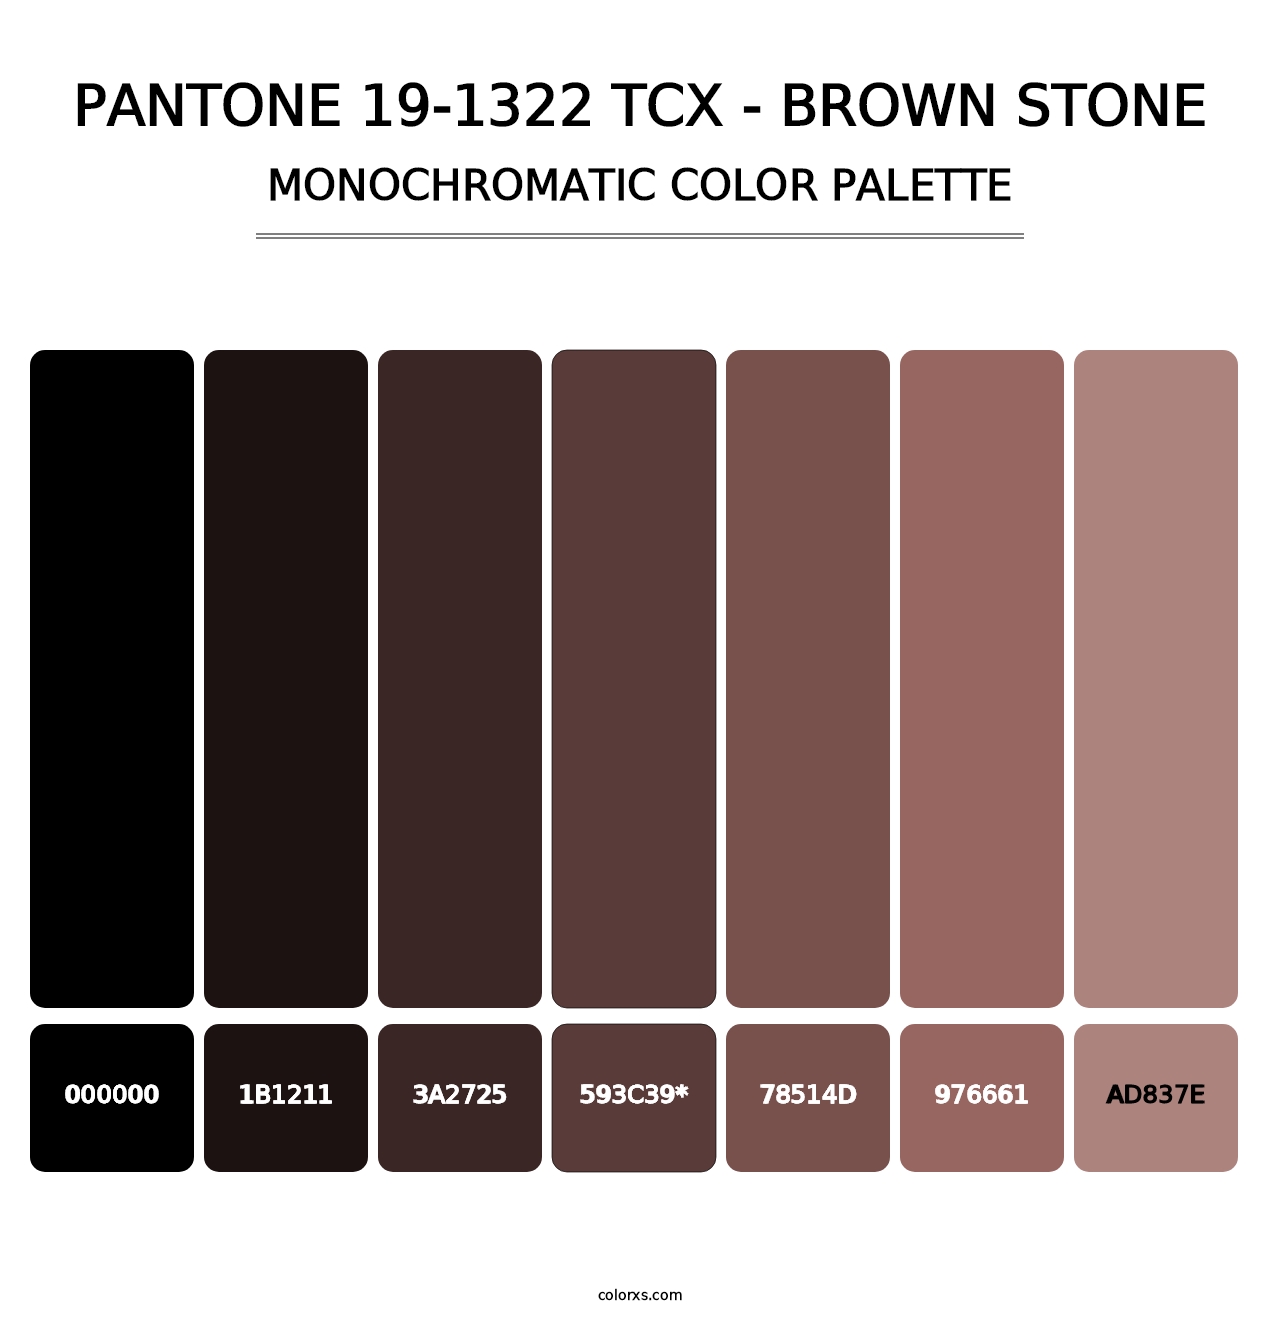 PANTONE 19-1322 TCX - Brown Stone - Monochromatic Color Palette